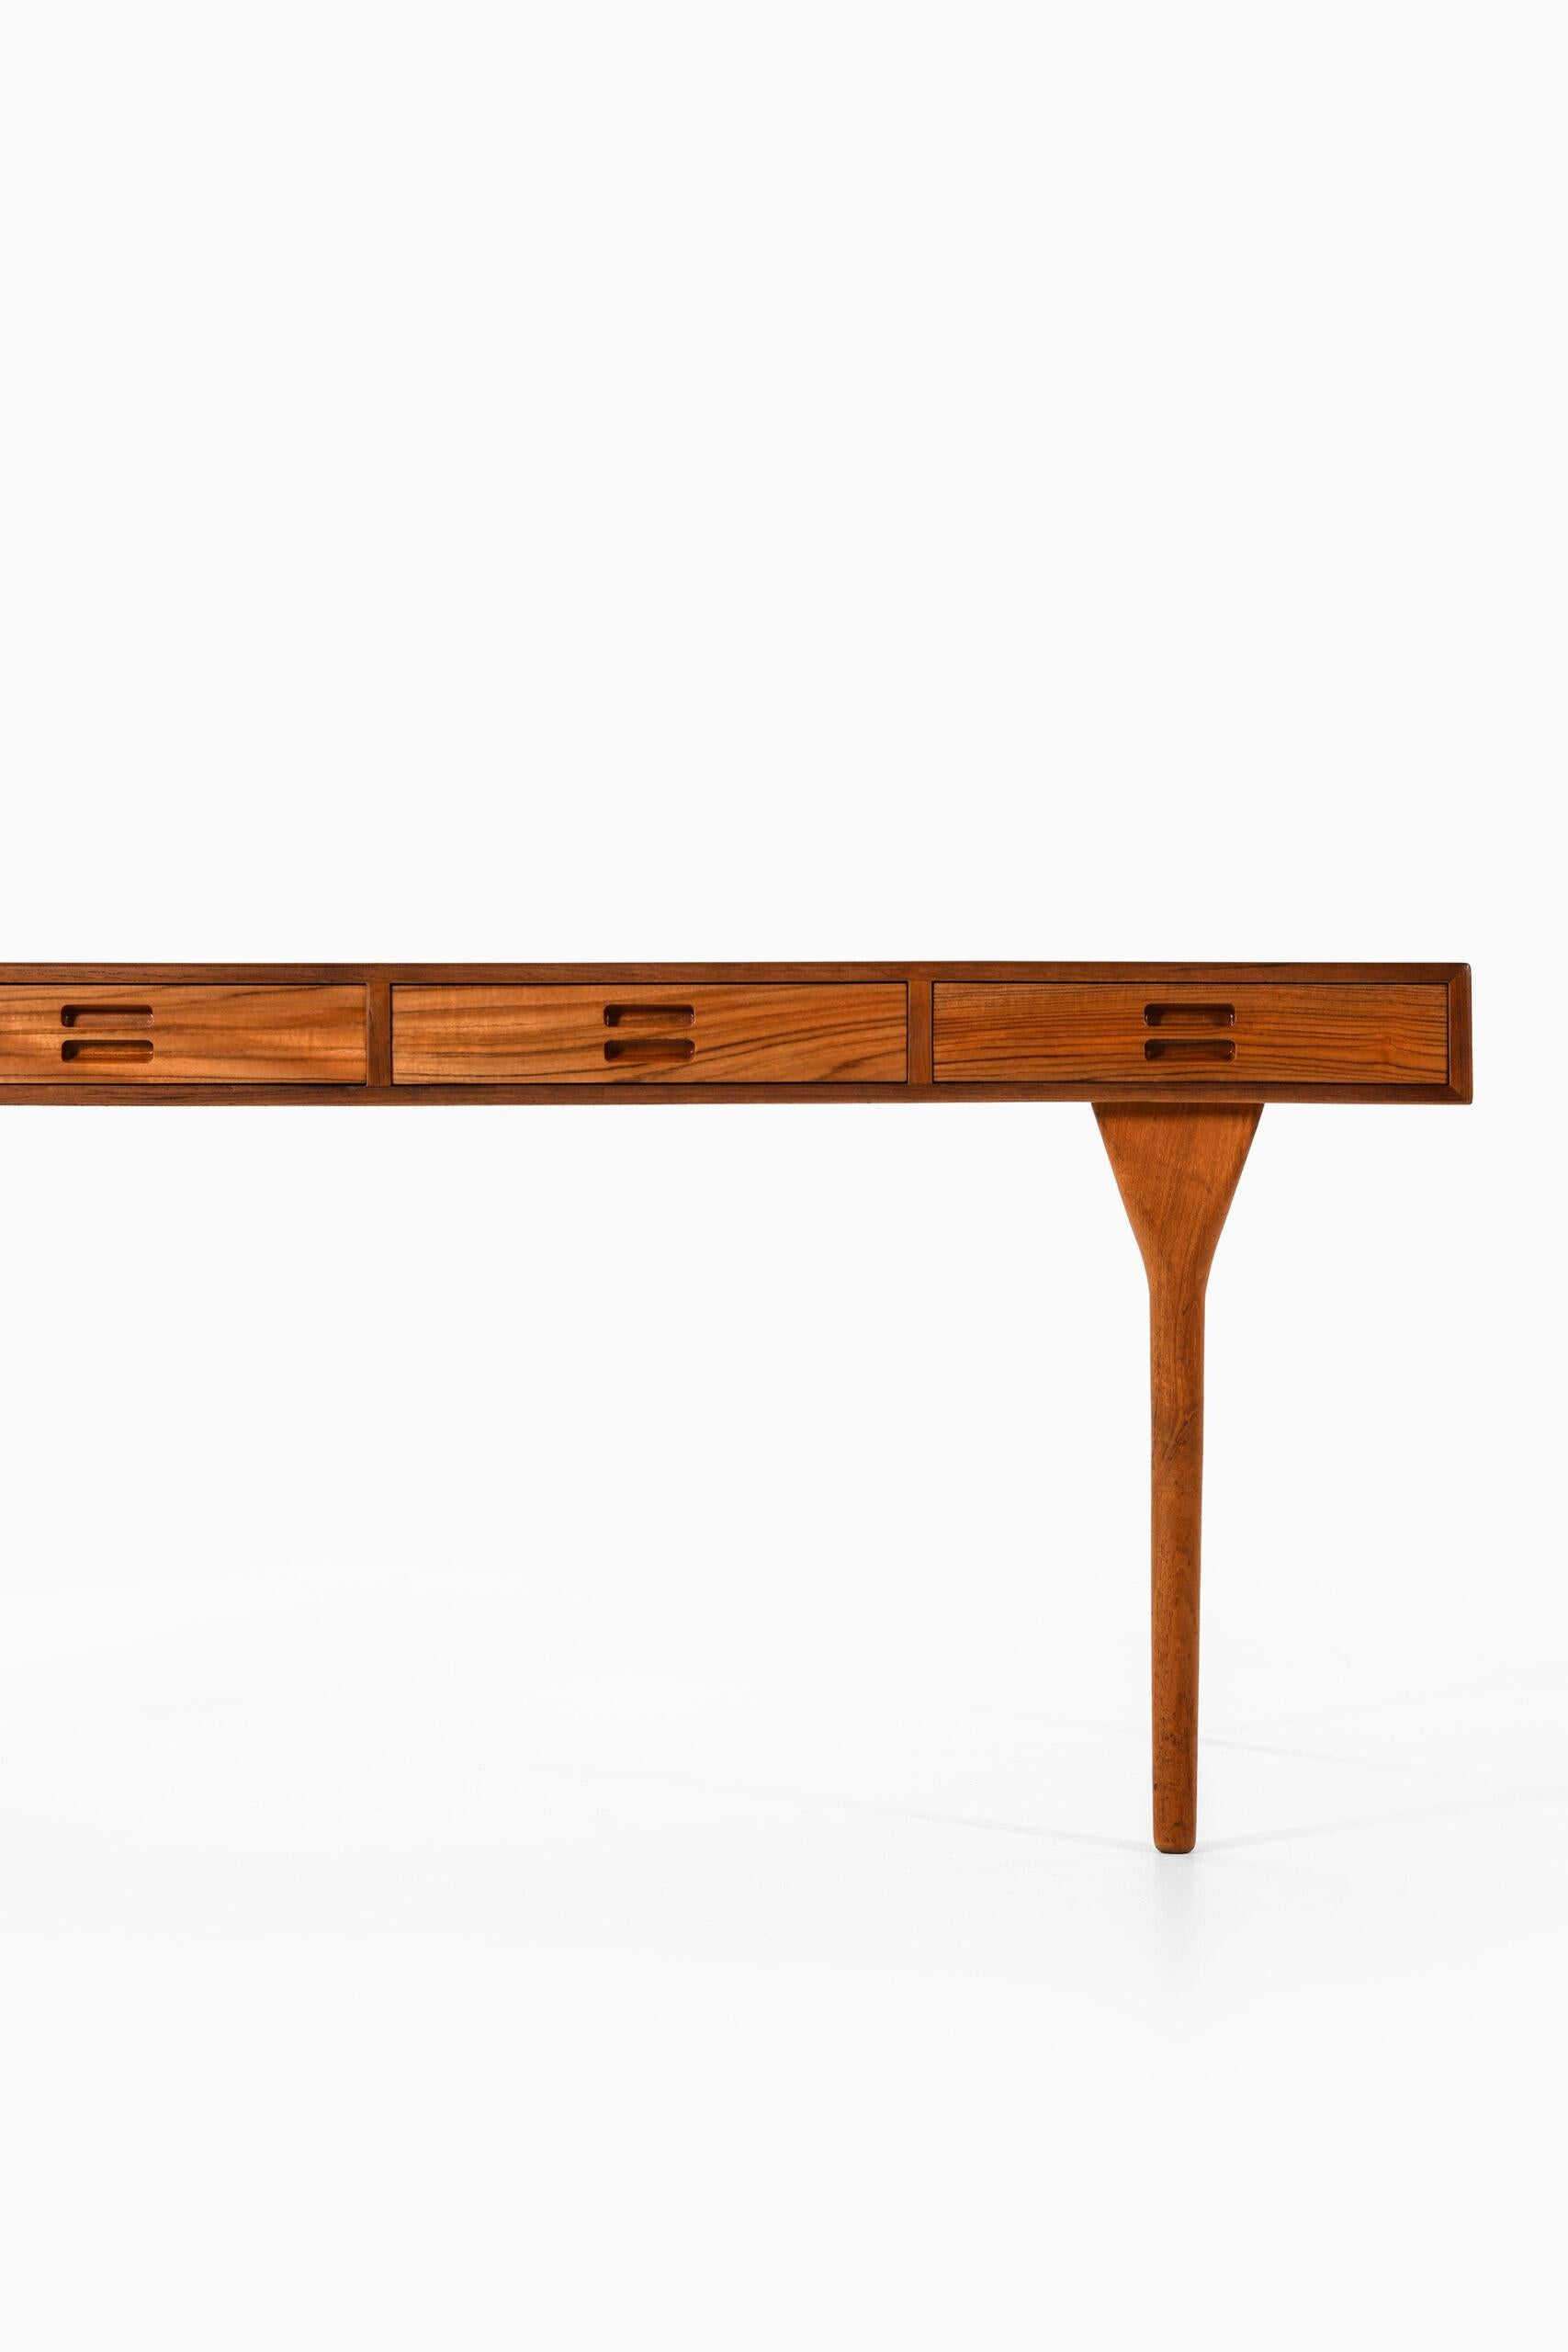 Rare freestanding desk with 4 drawers designed by Nanna Ditzel. Produced by Søren Willadsen in Denmark.